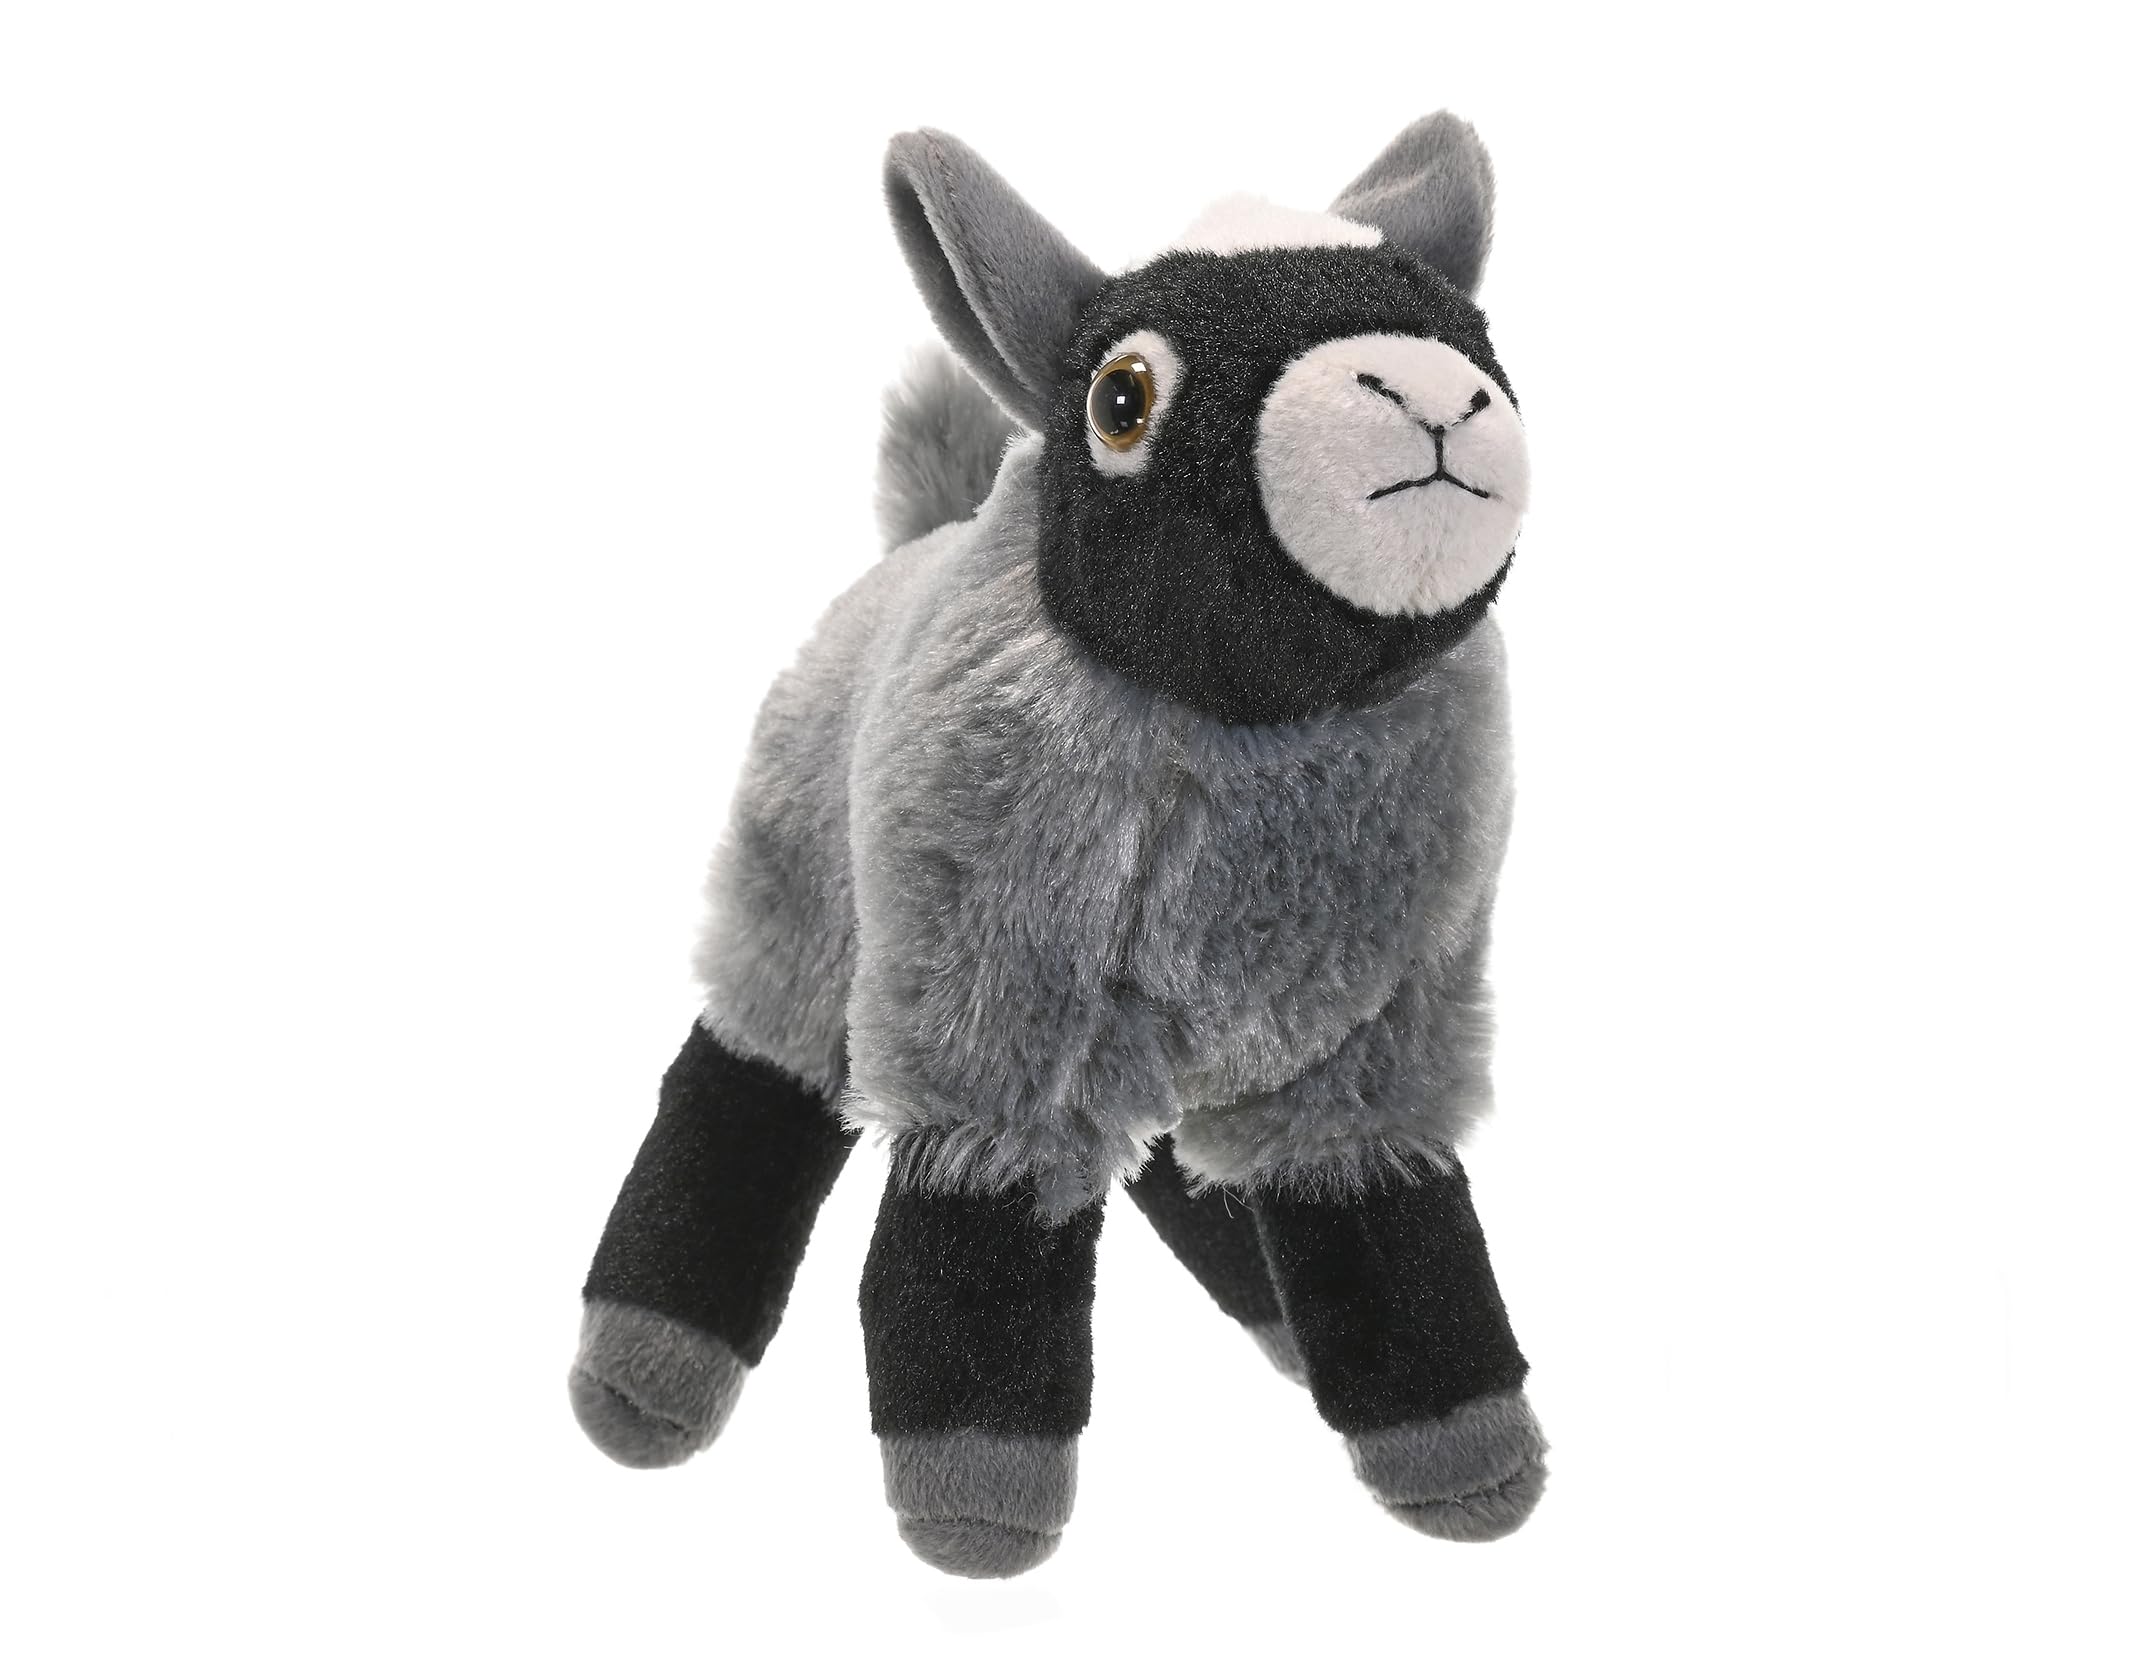 8" Wild Republic Goat Plush Stuffed Animal Toy $6.06 + Free Shipping w/ Prime or on $35+